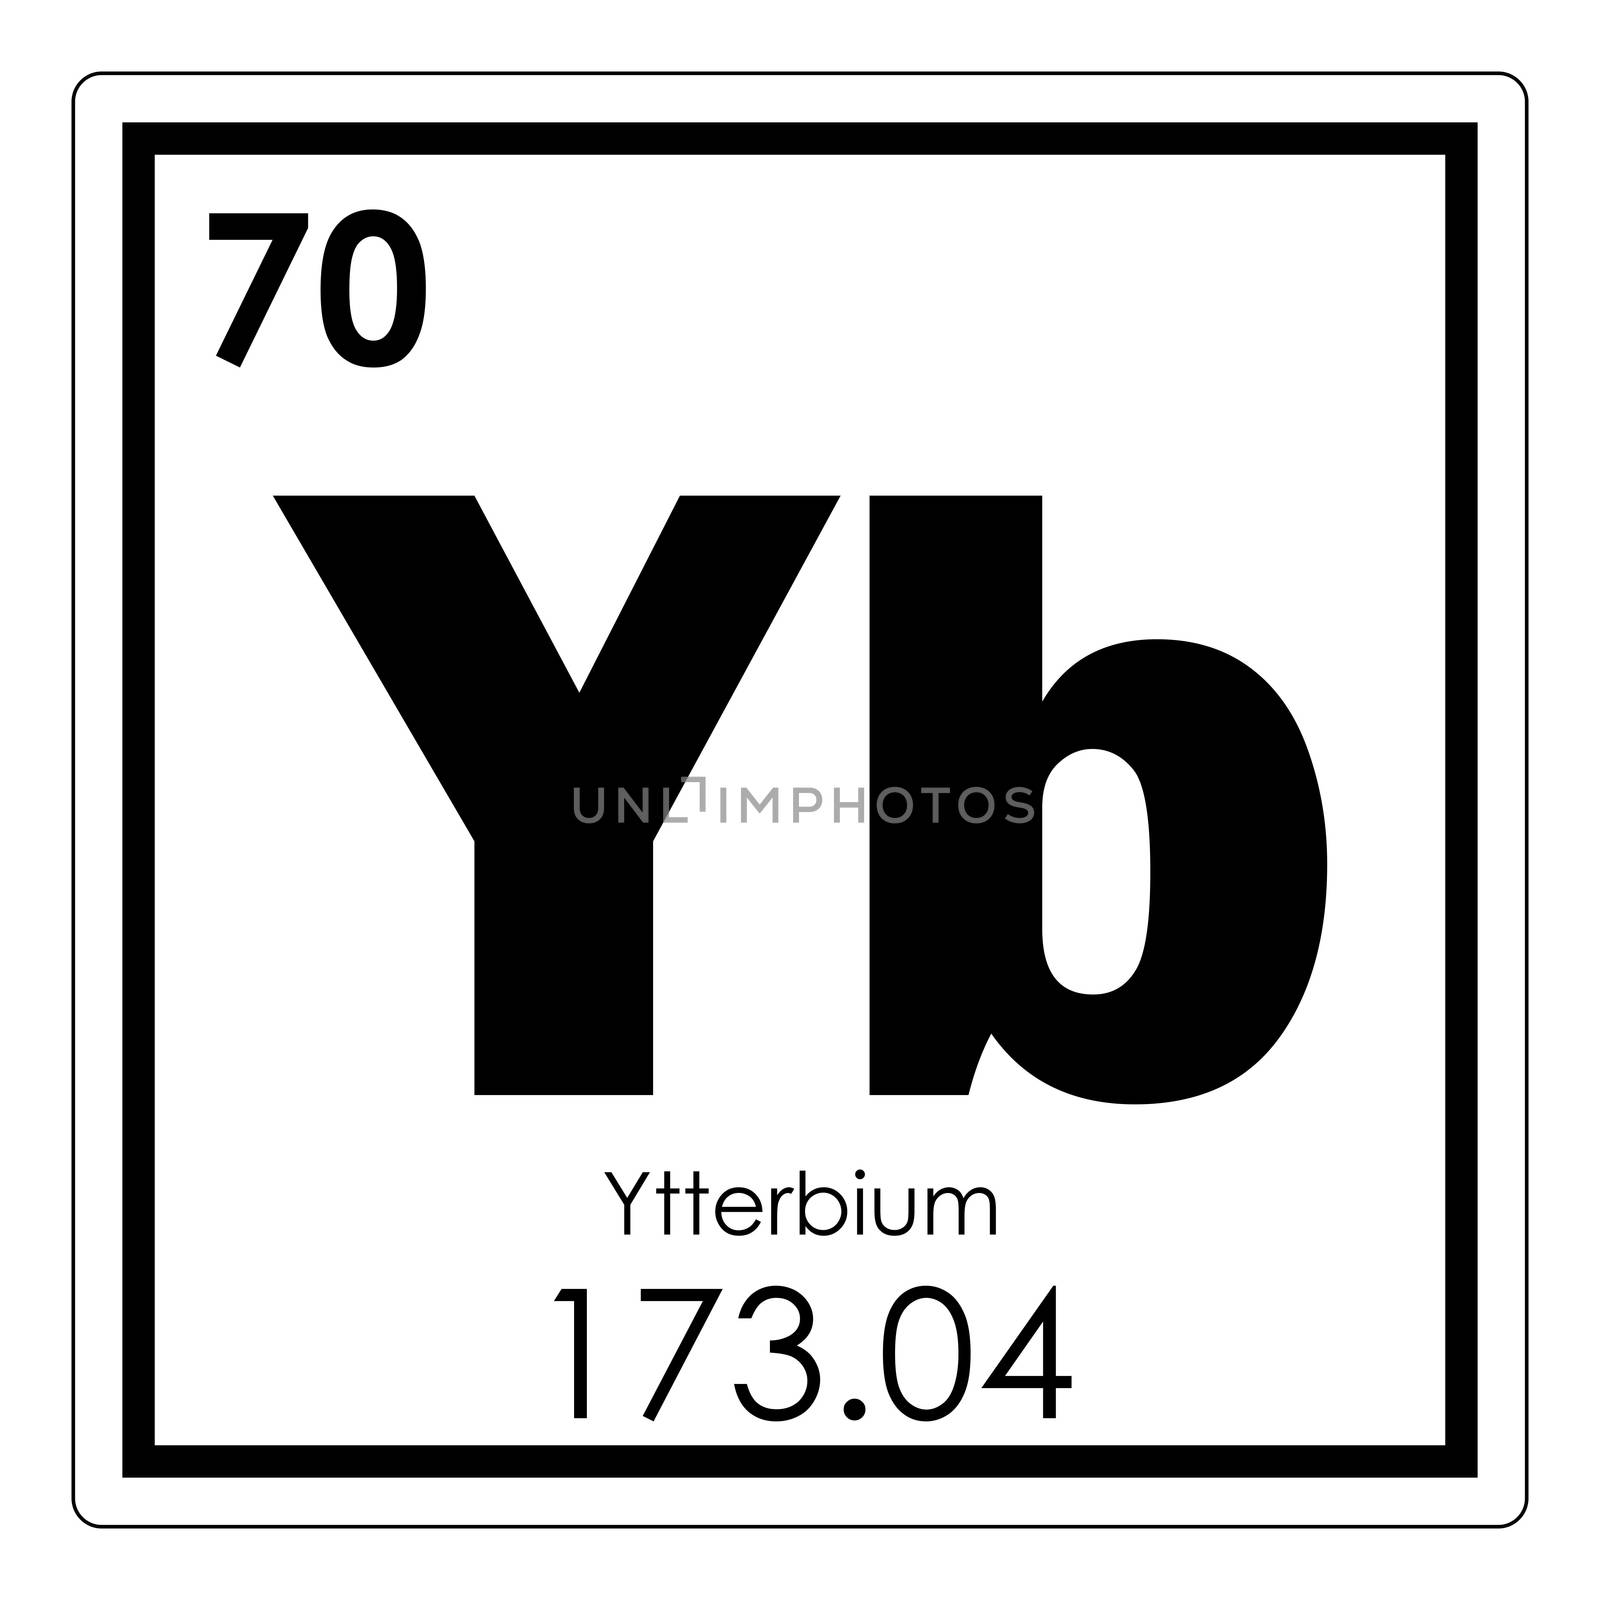 Ytterbium chemical element by tony4urban